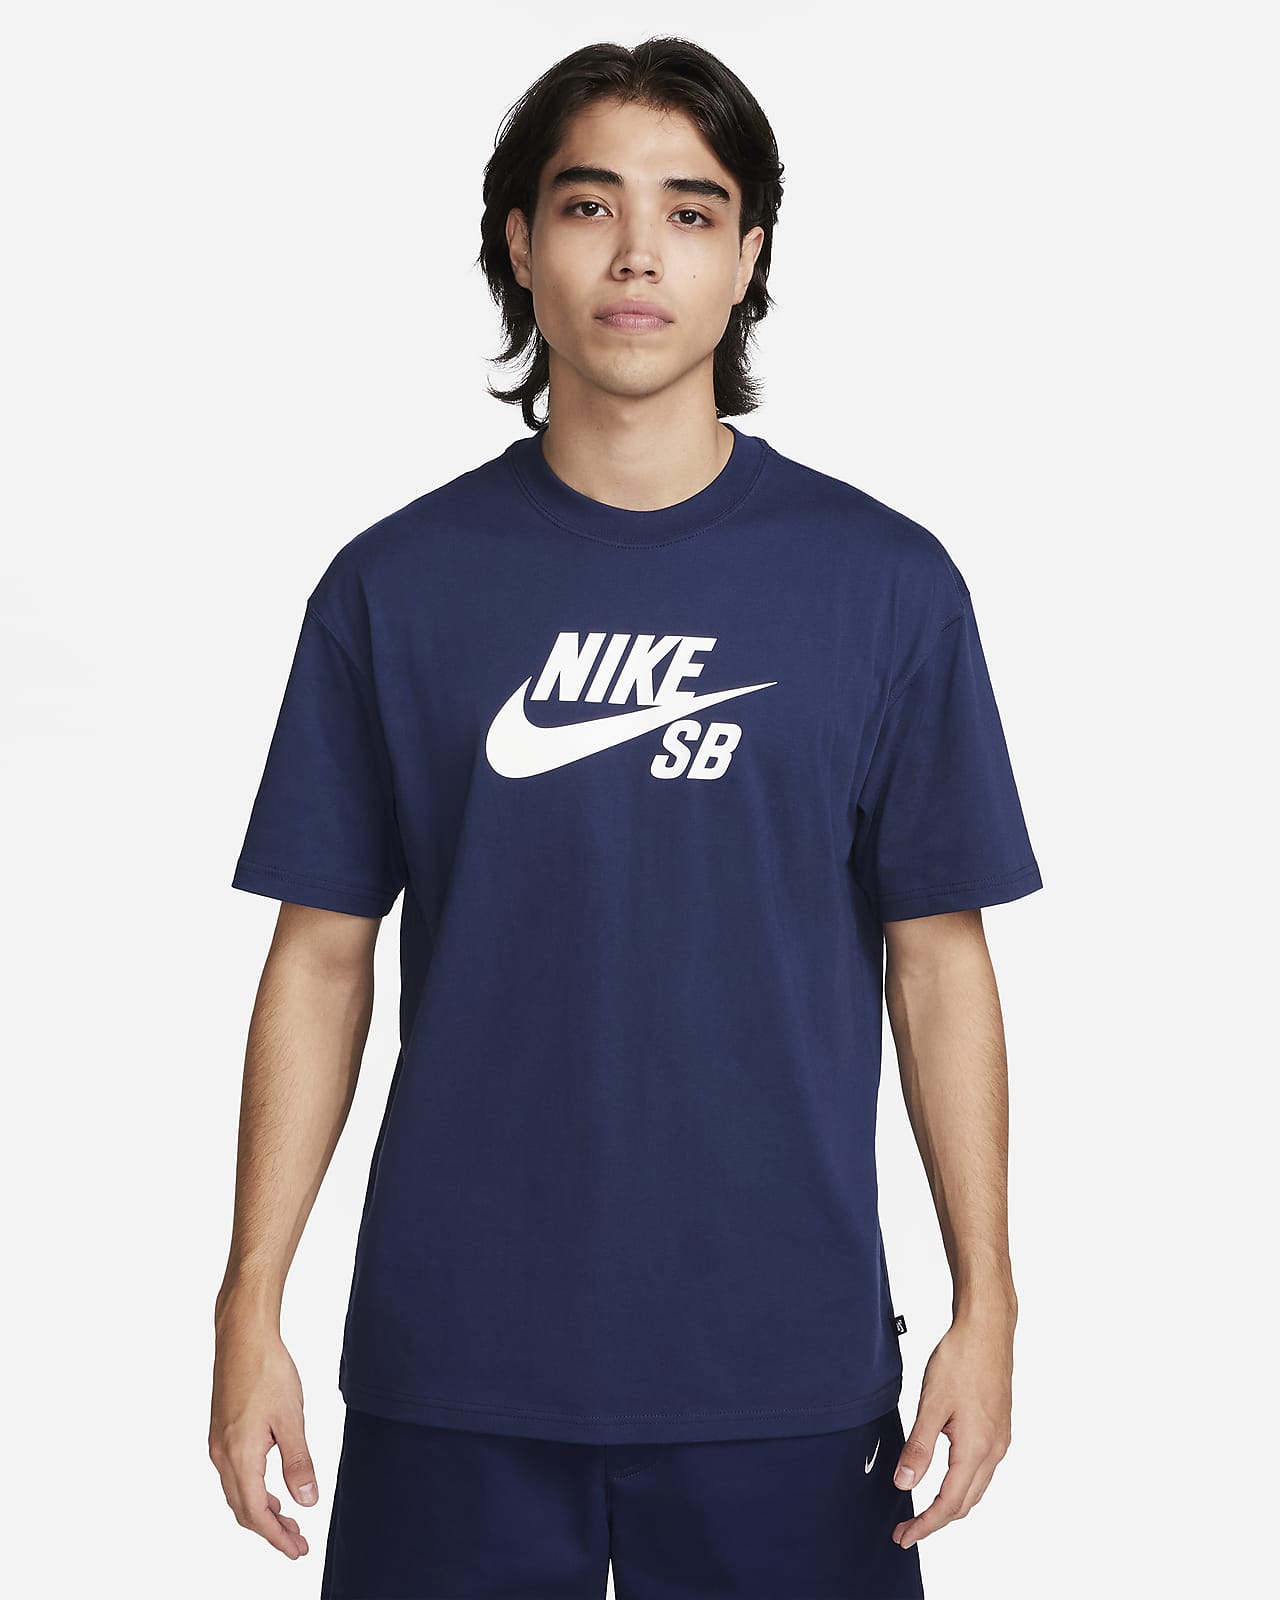 T-shirt da skate con logo Nike SB - Uomo